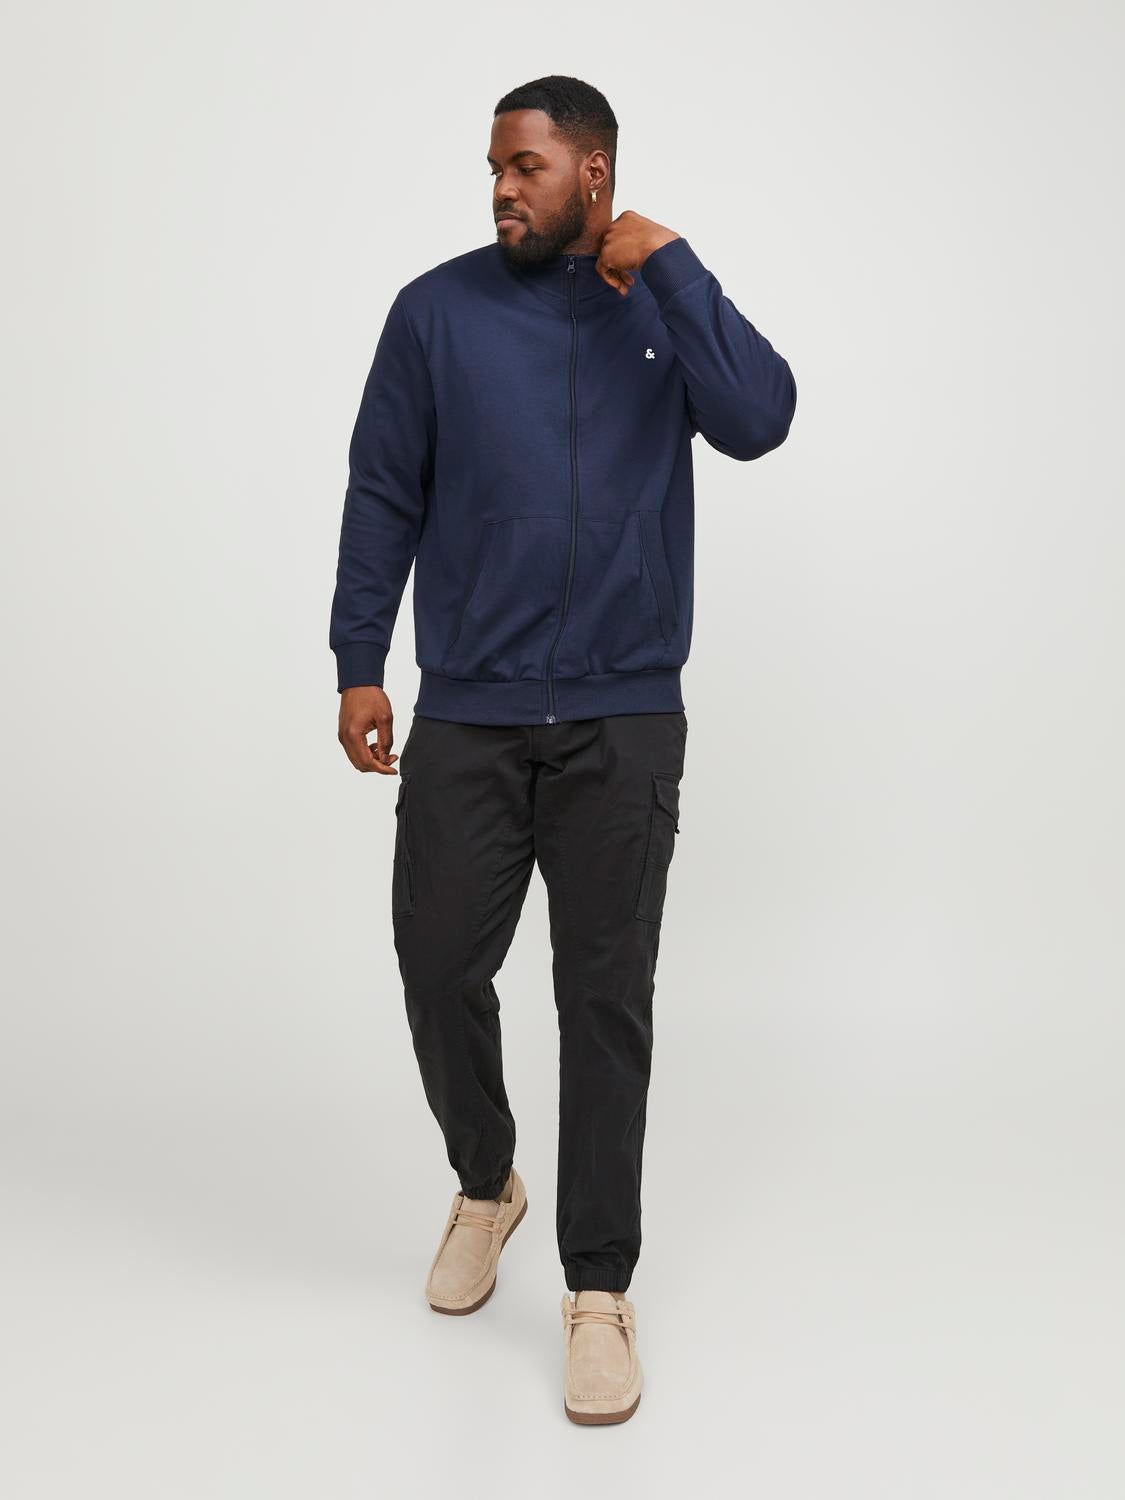 Plus Size Ensfarvet Sweatshirt med lynlås